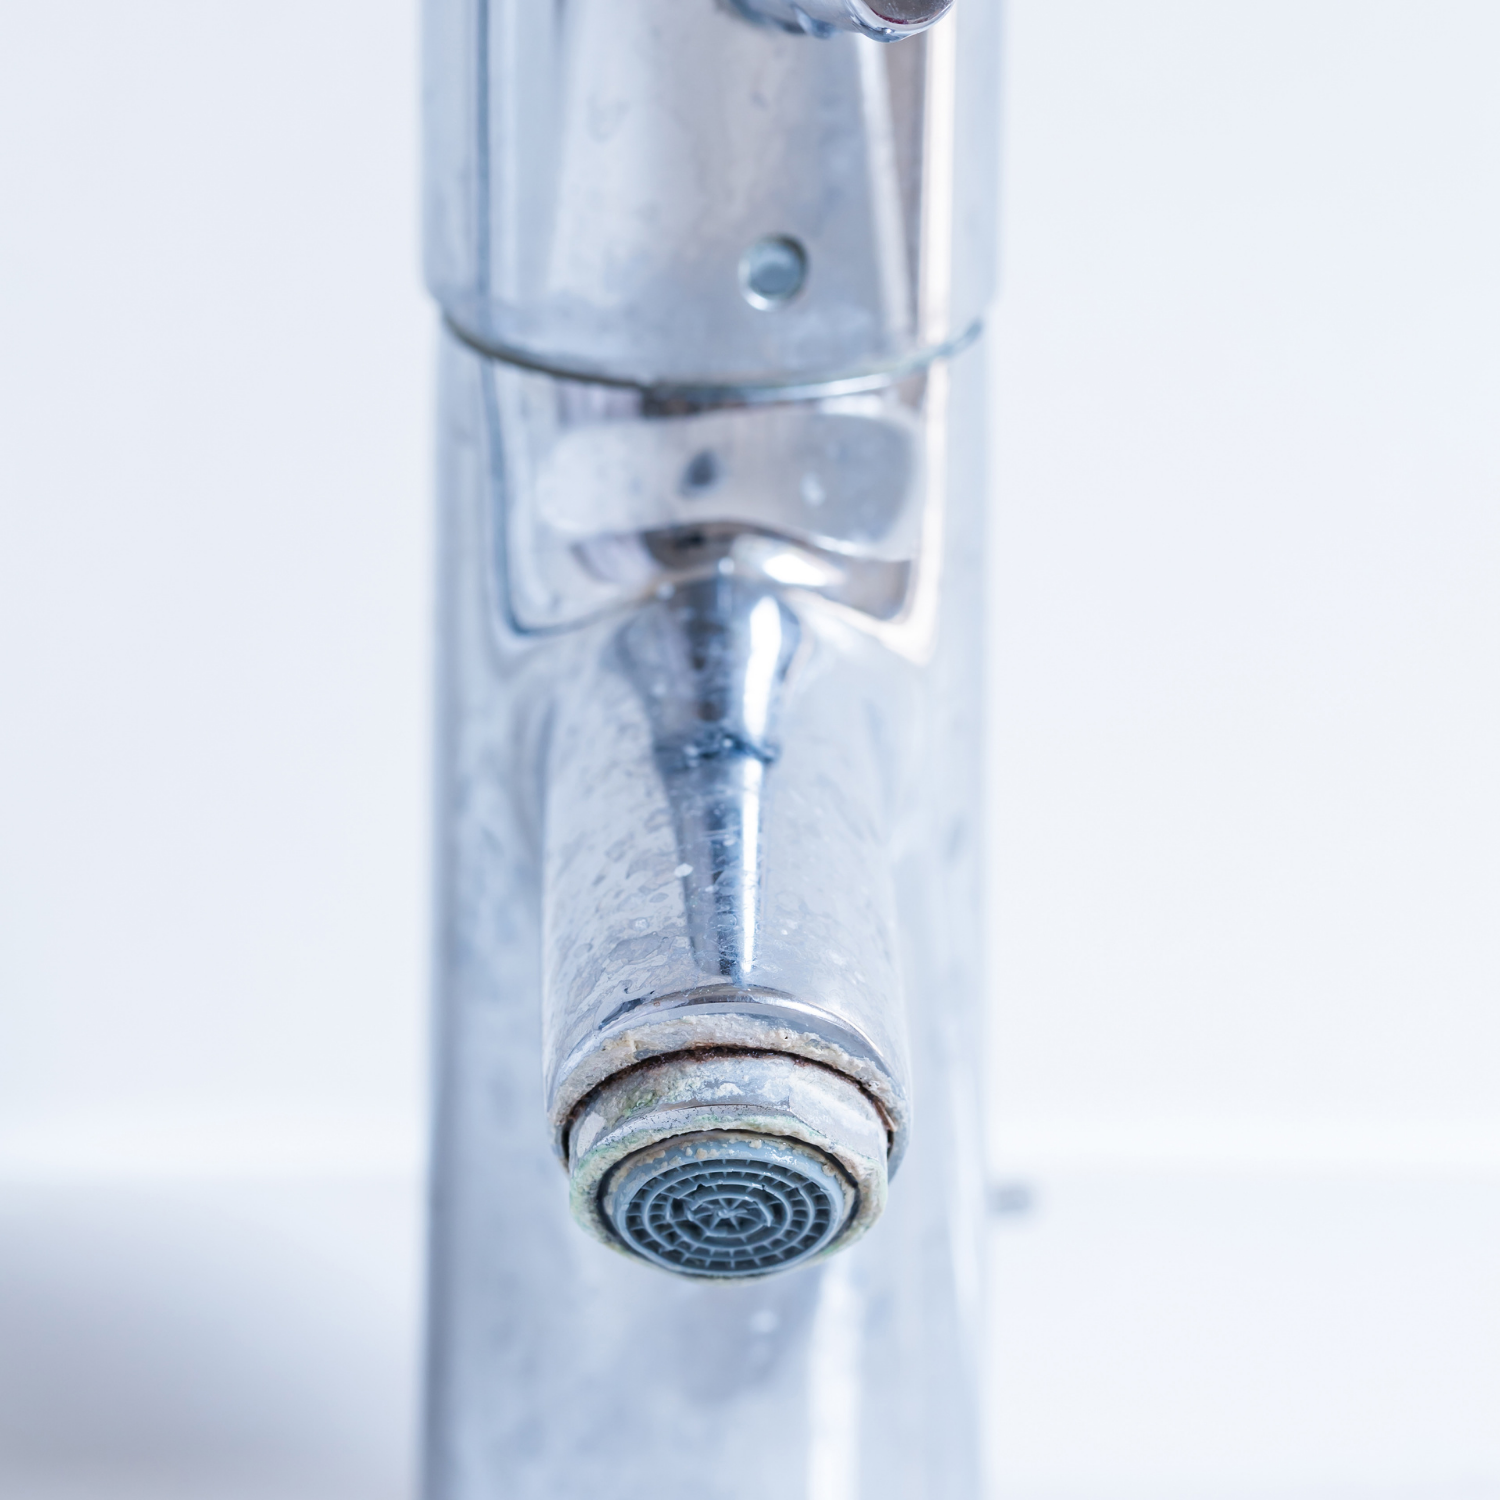 Why use an RKIN water softener